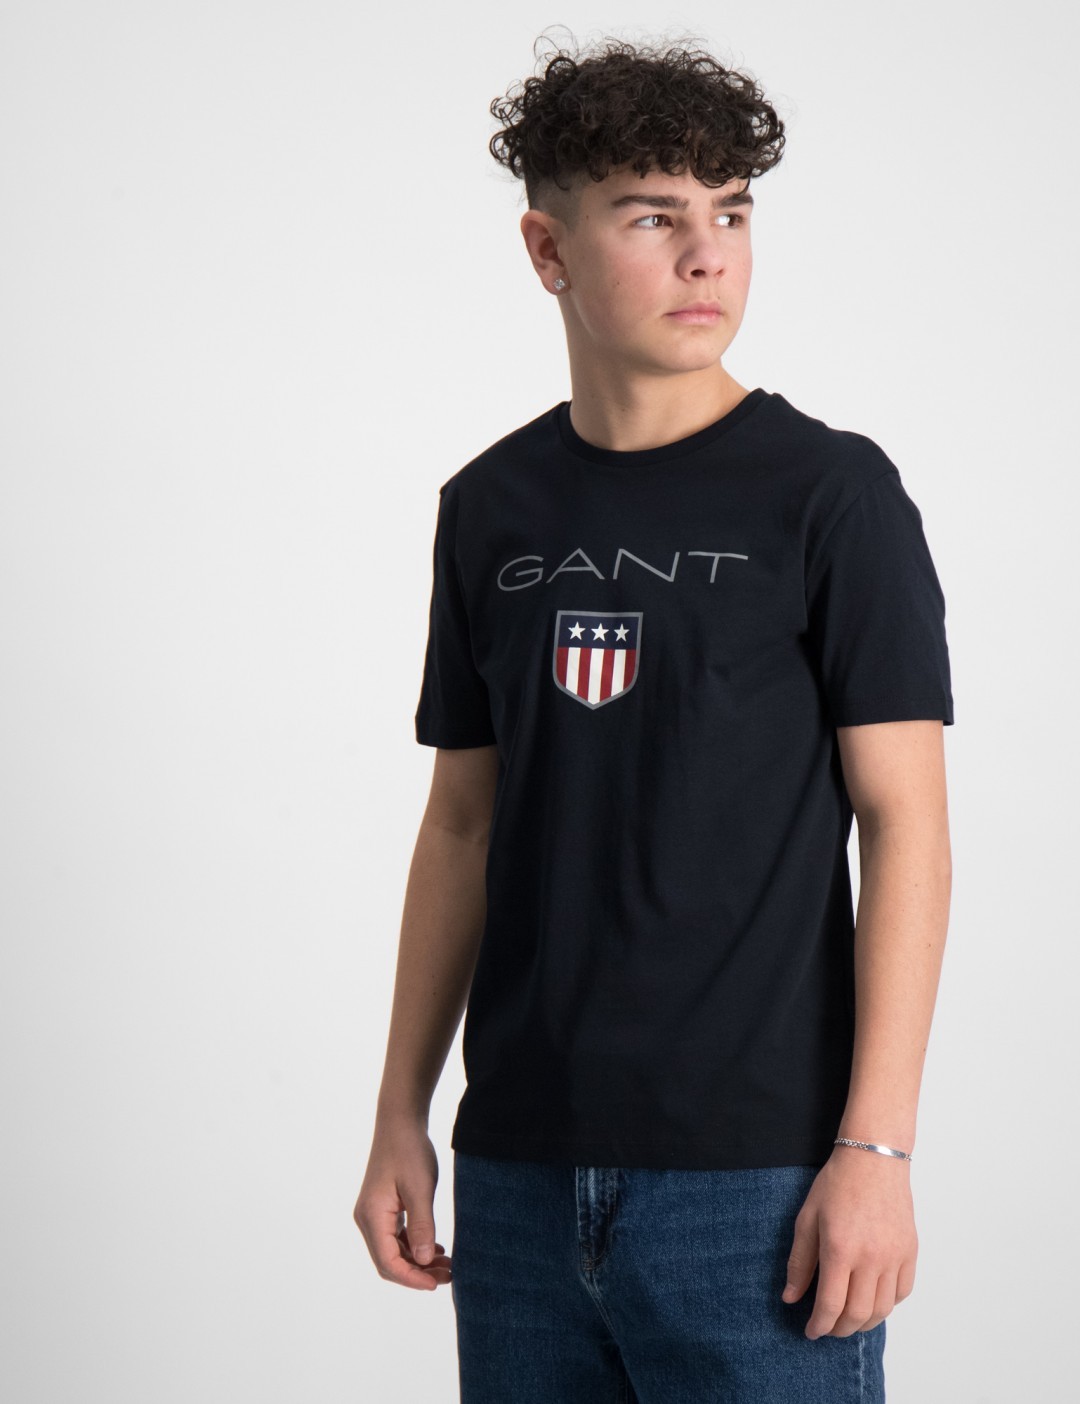 | SHIELD Pojat SS Kids varten T-SHIRT Brand GANT Store Musta